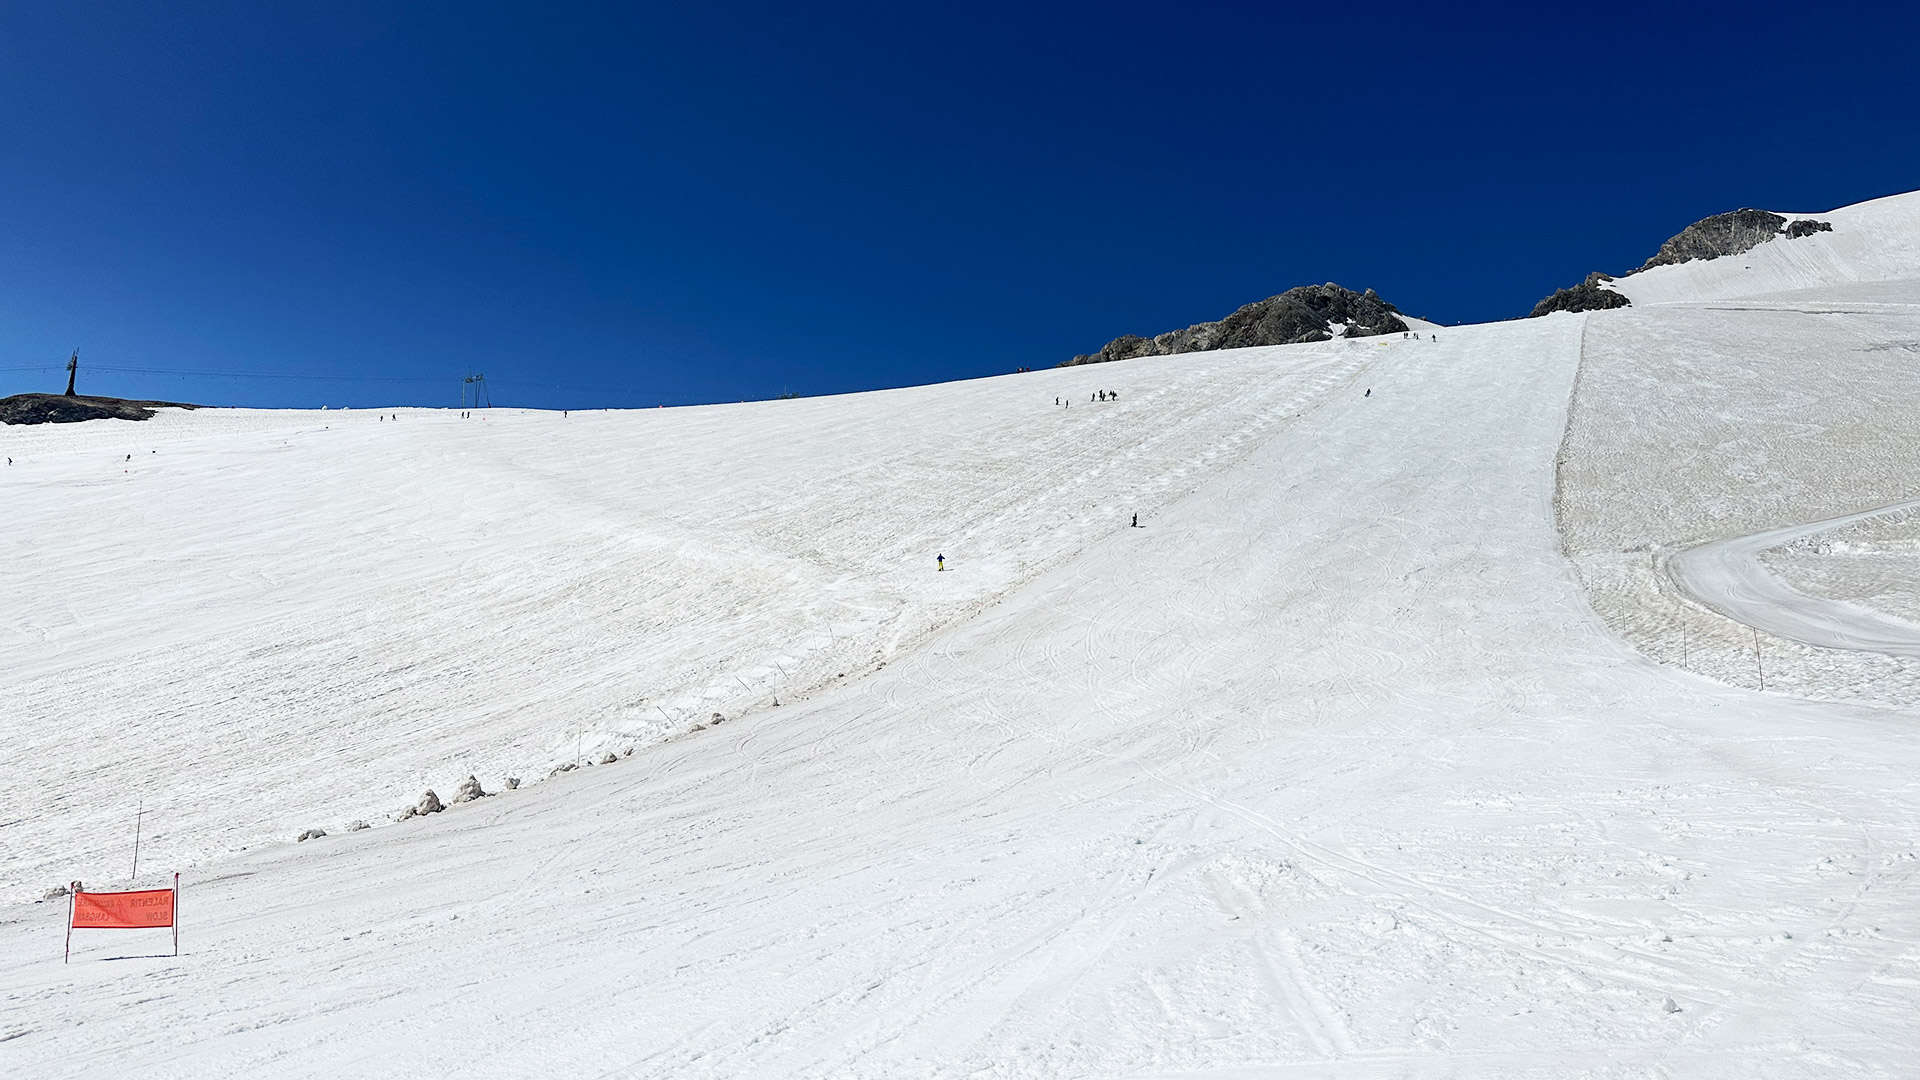 Summer ski conditions on Tignes' glacier